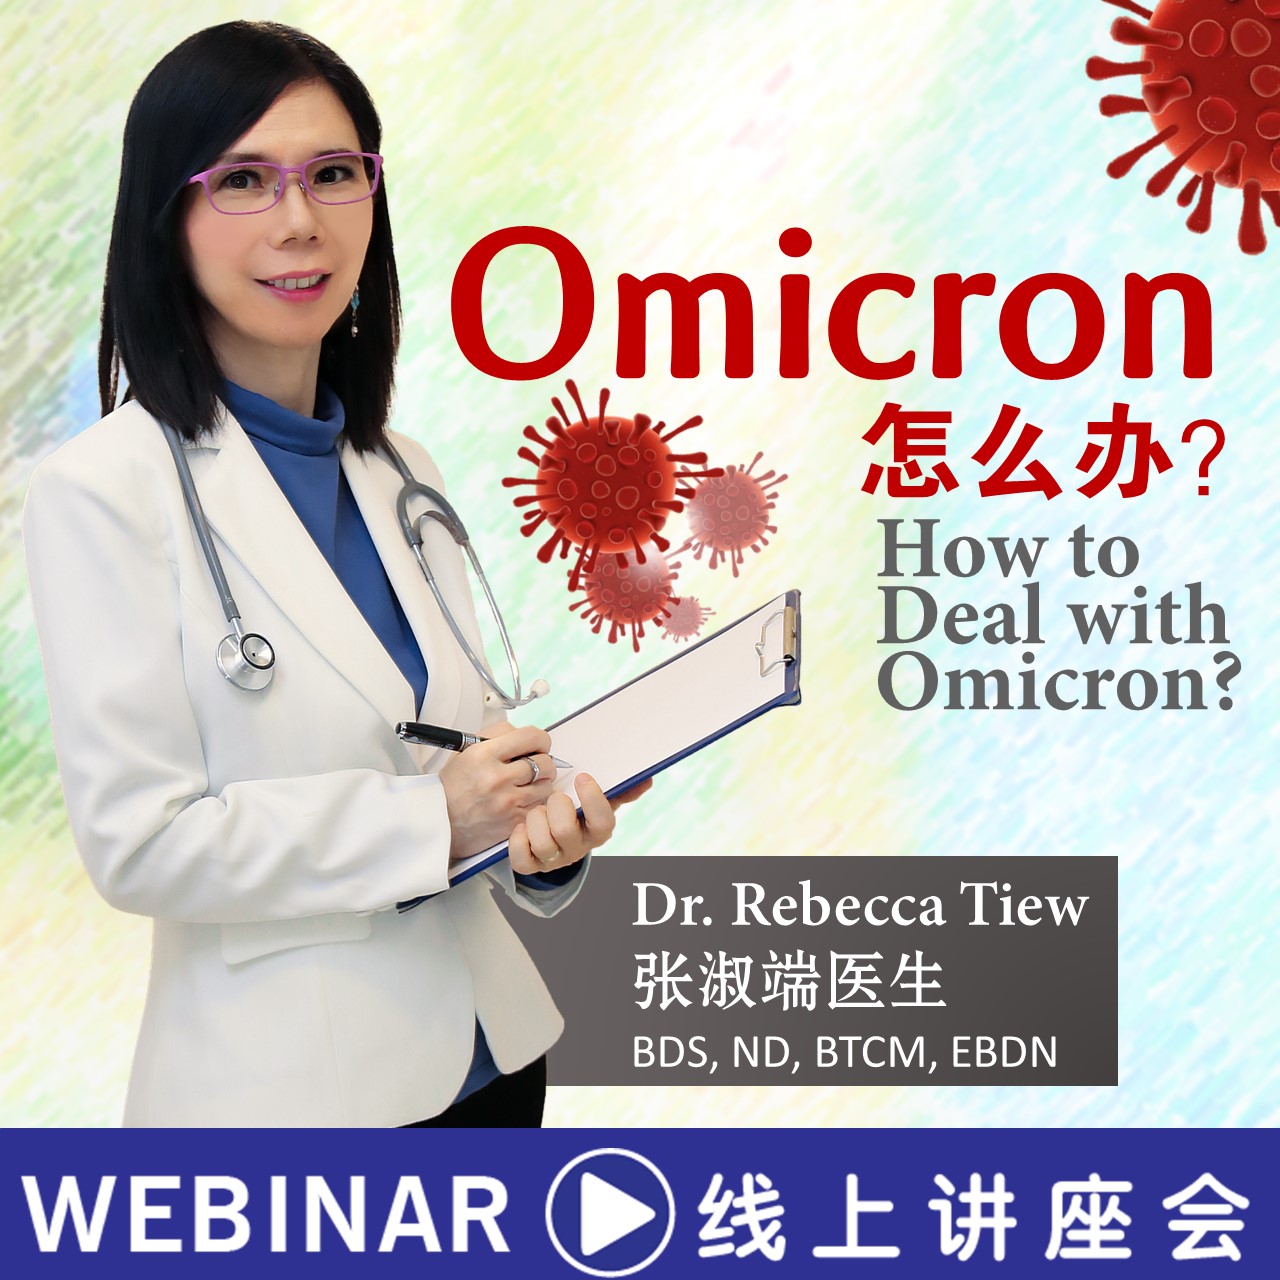 Omicron, 怎么办？ | Dr. Rebecca Tiew 线上讲座会